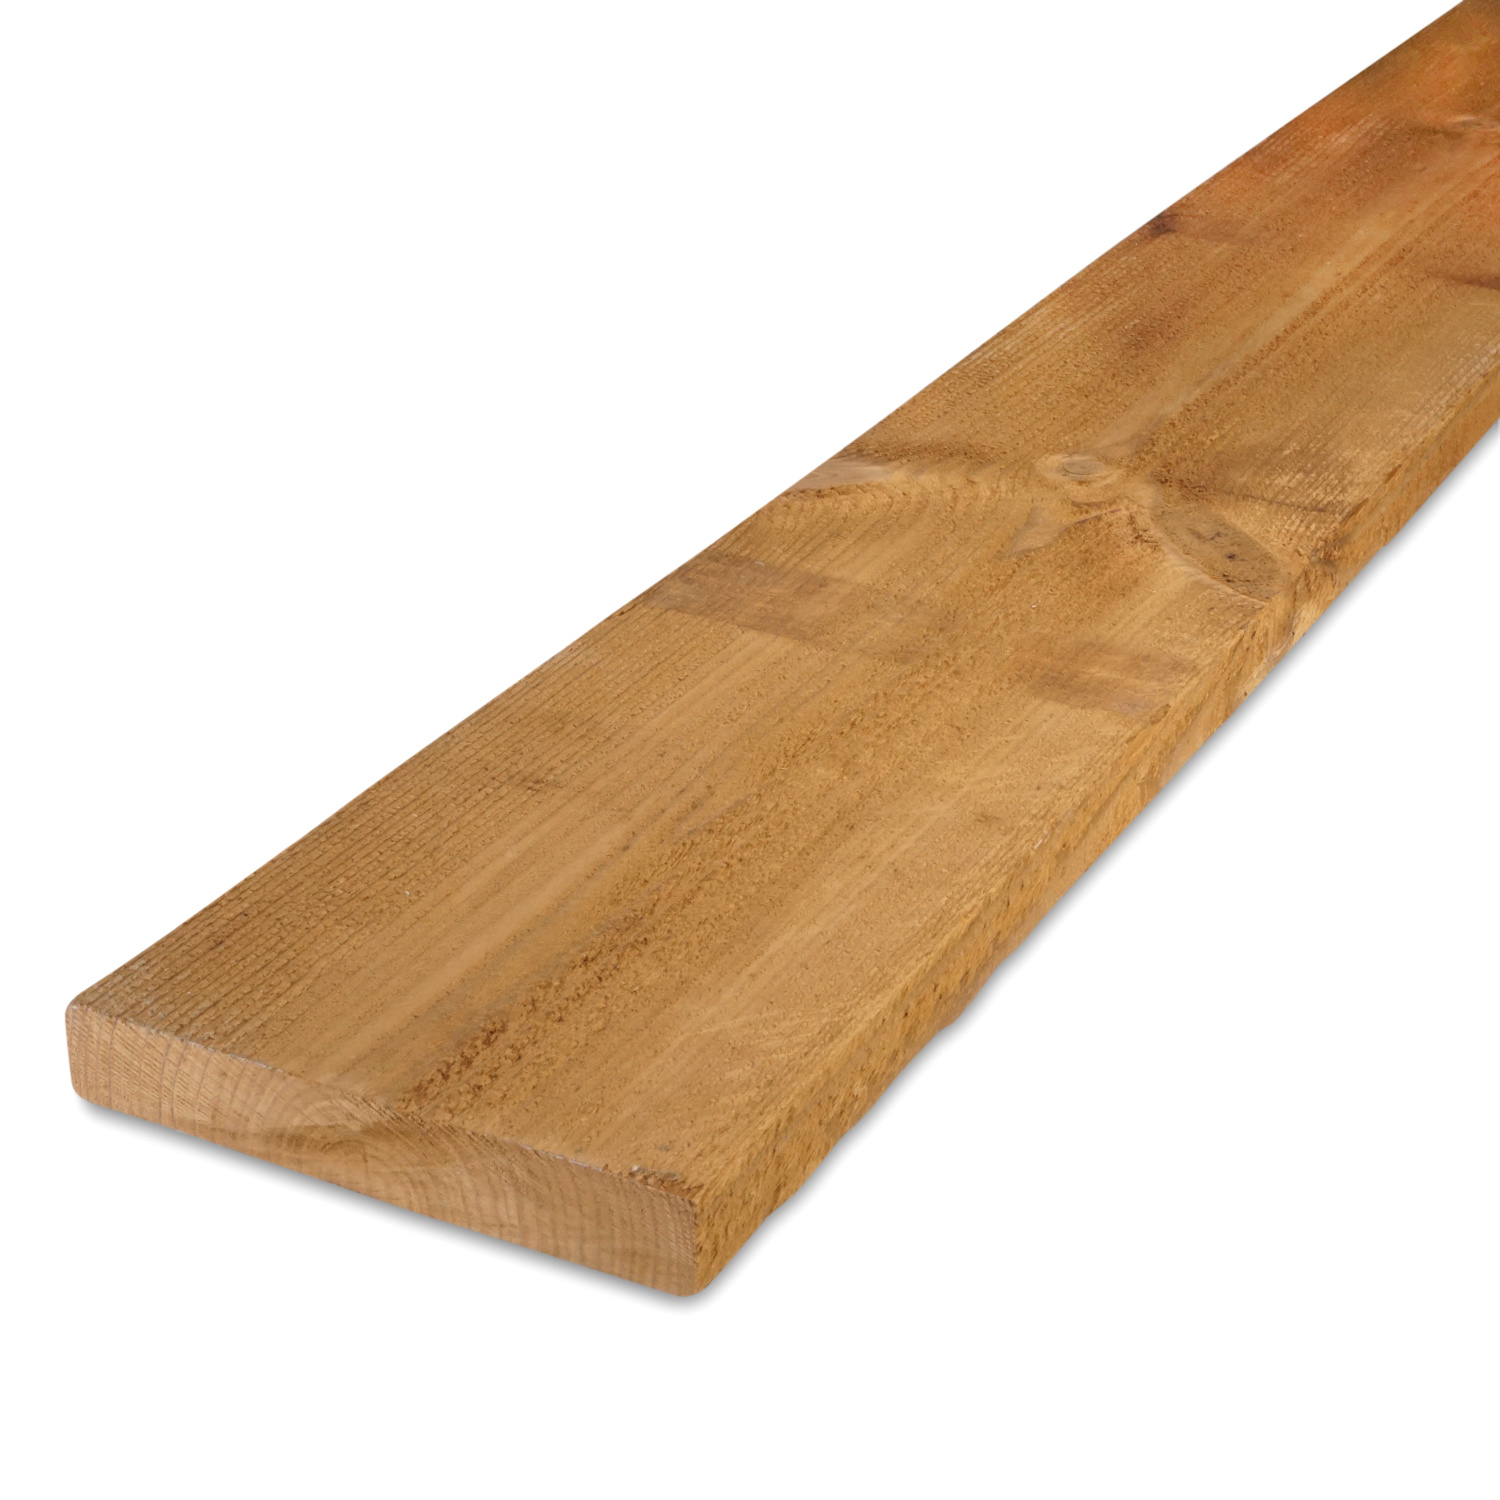  Thermowood grenen plank 25x100mm - ruw (fijnbezaagd) - kunstmatig gedroogd (kd 8-12%) - thermisch gemodificeerd grenen hout (thermohout)